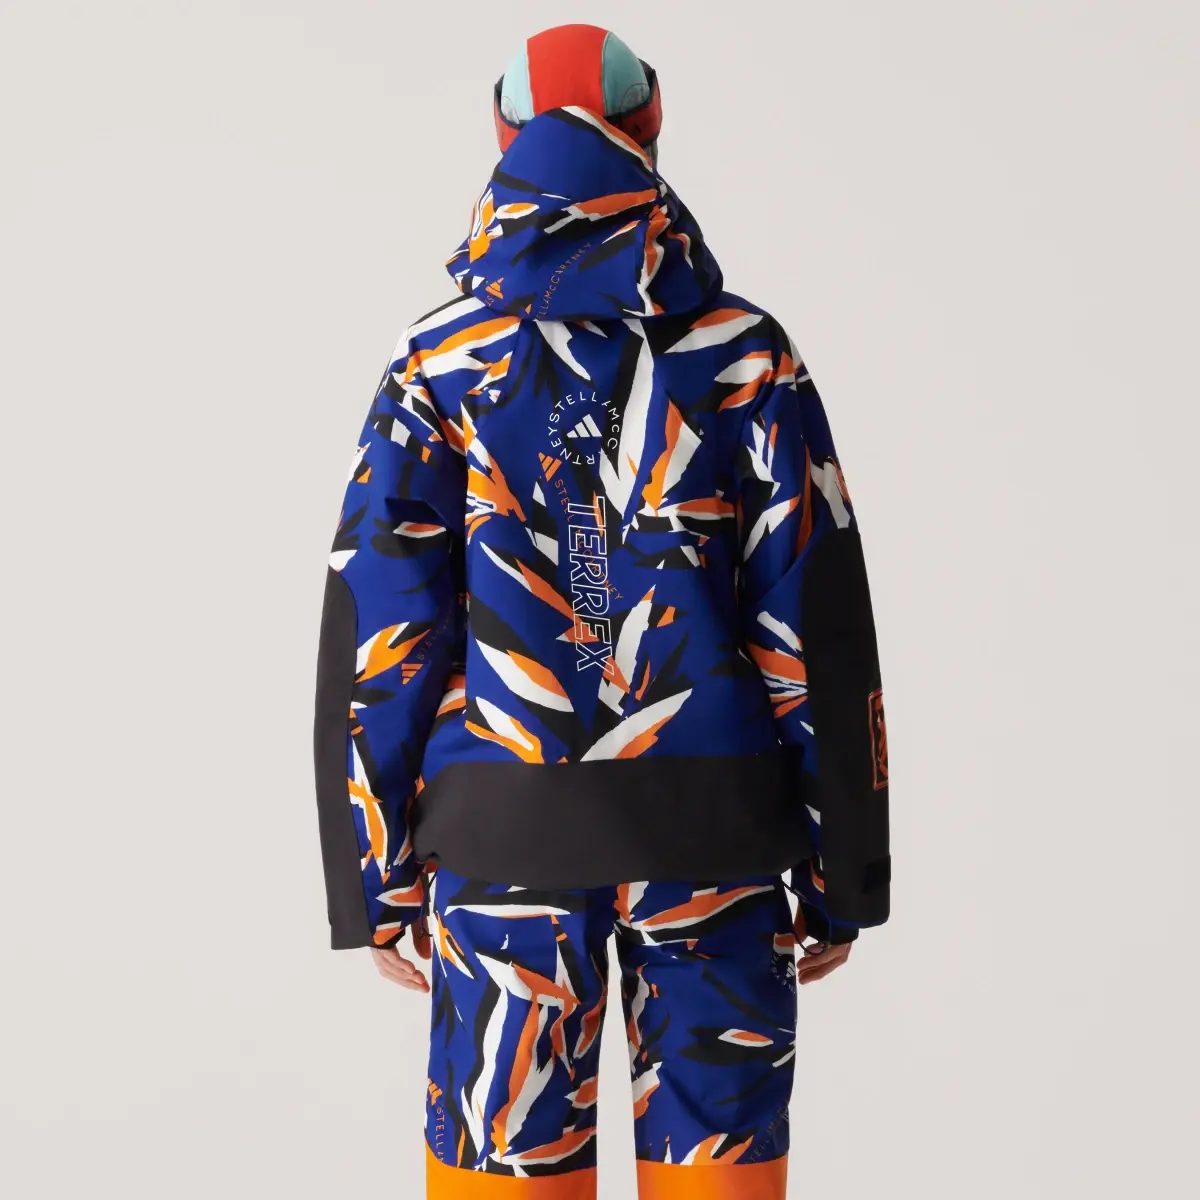 Adidas by Stella McCartney x Terrex TrueNature Jacket. 3